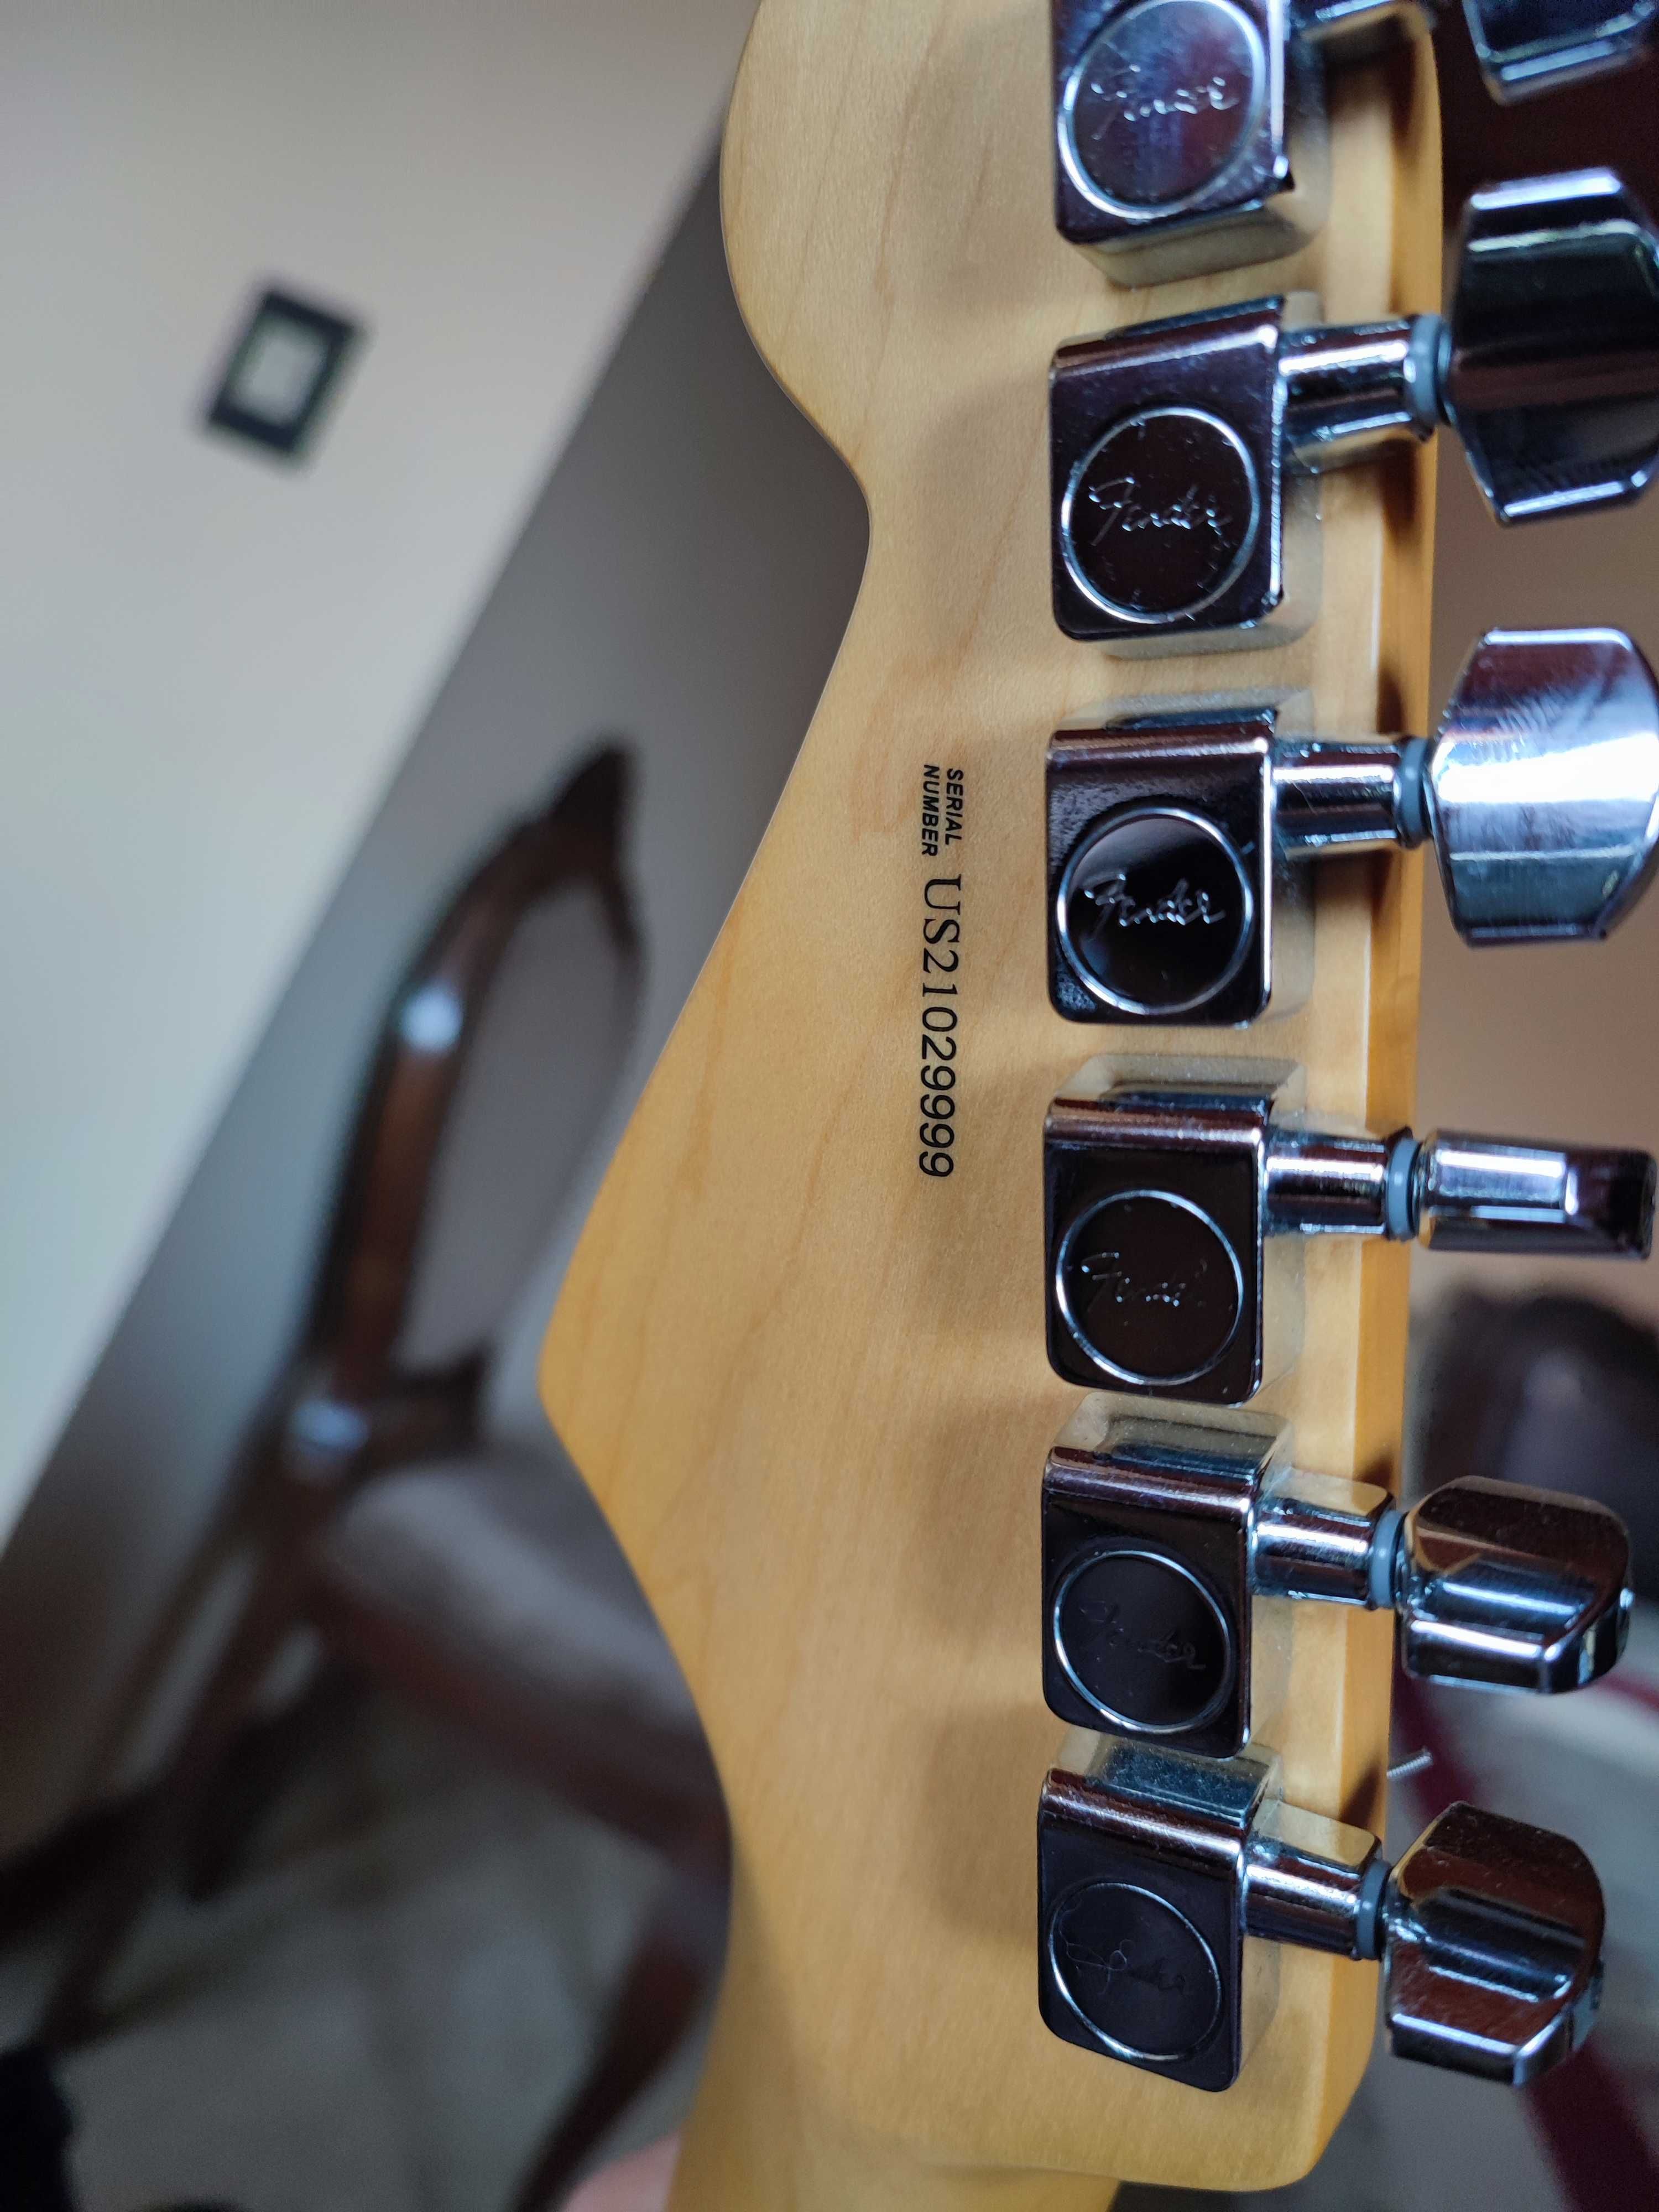 Fender Stratocaster American Pro II